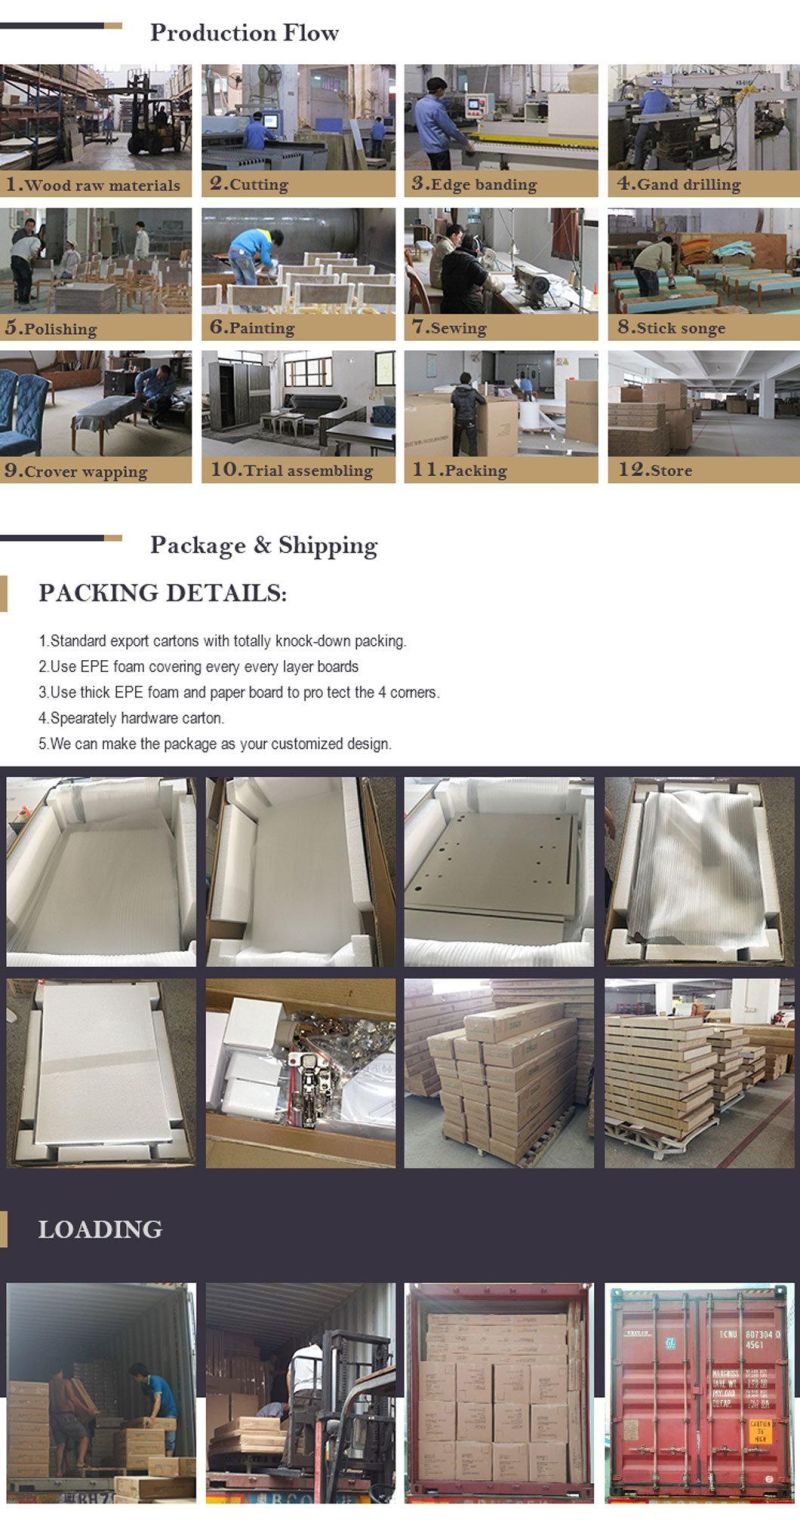 Professional Foshan Furniture Factory Wholesaling Bedroom Supplier